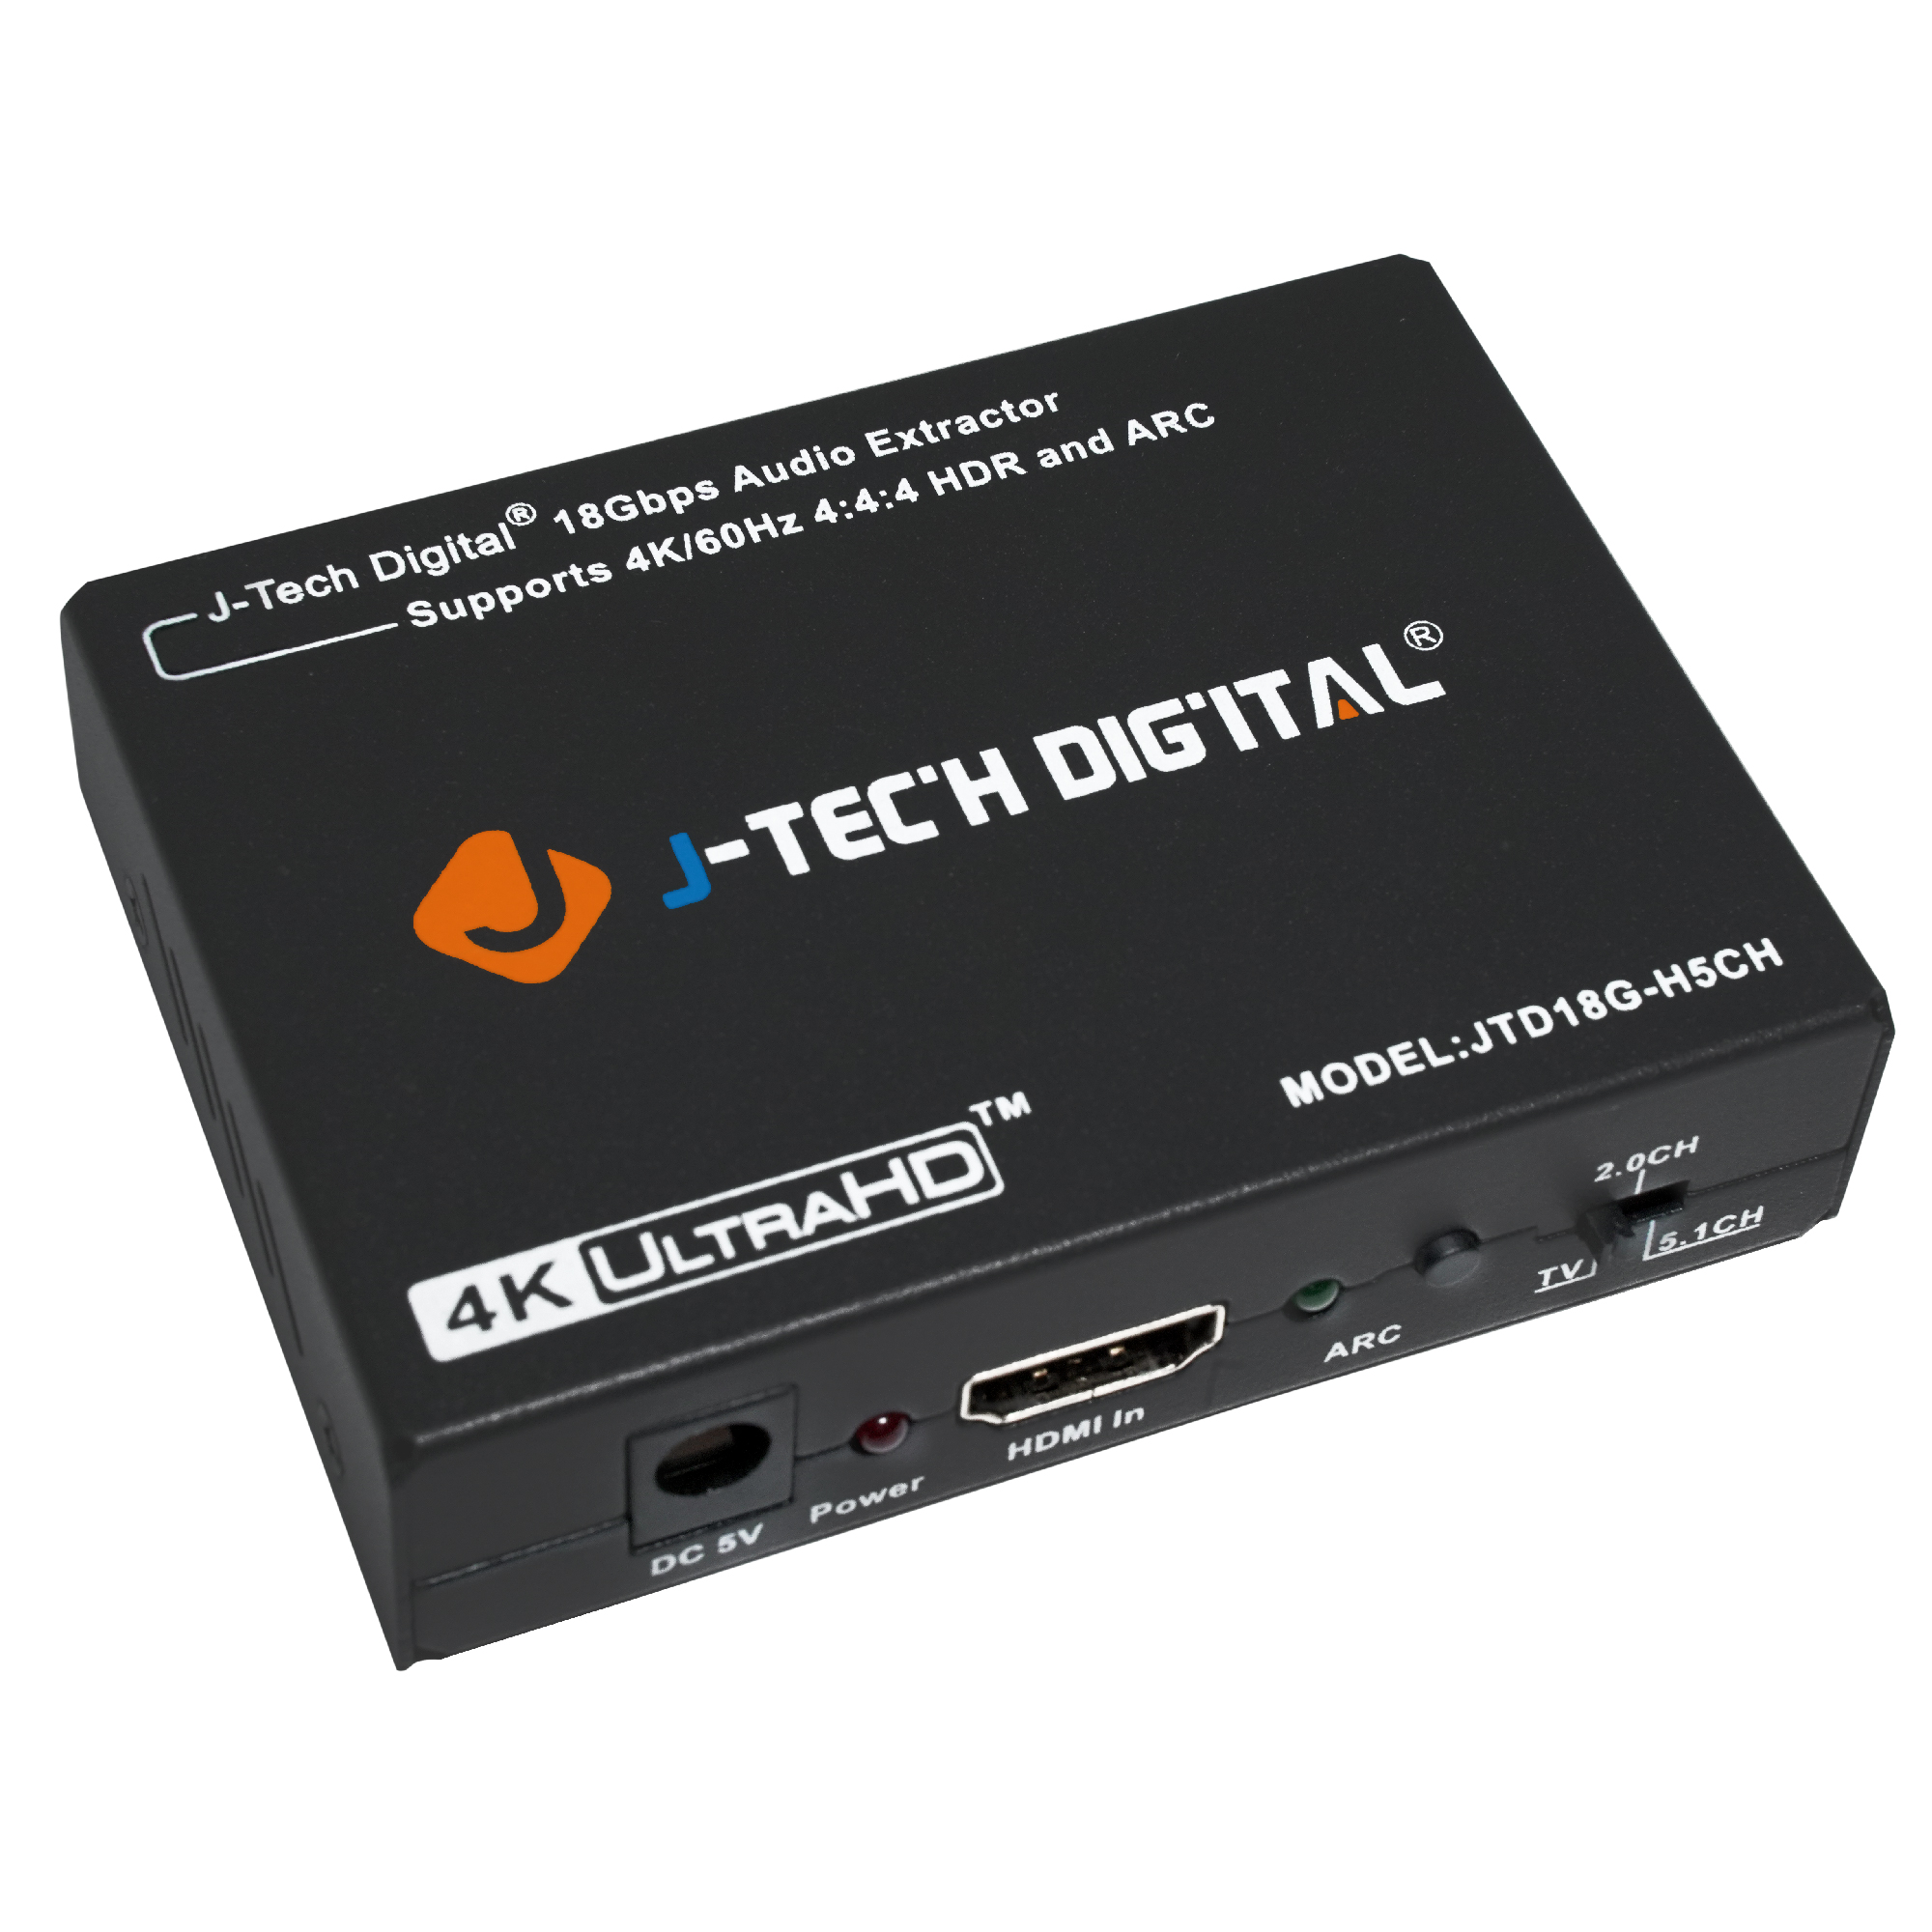 Tilpasning Flygtig Delvis HDMI-ARC HDMI 2.0 Audio Extractor Converter SPDIF + 3.5mm Jack Output HDR10  [JTD18G-H5CH2] - J-Tech Digital